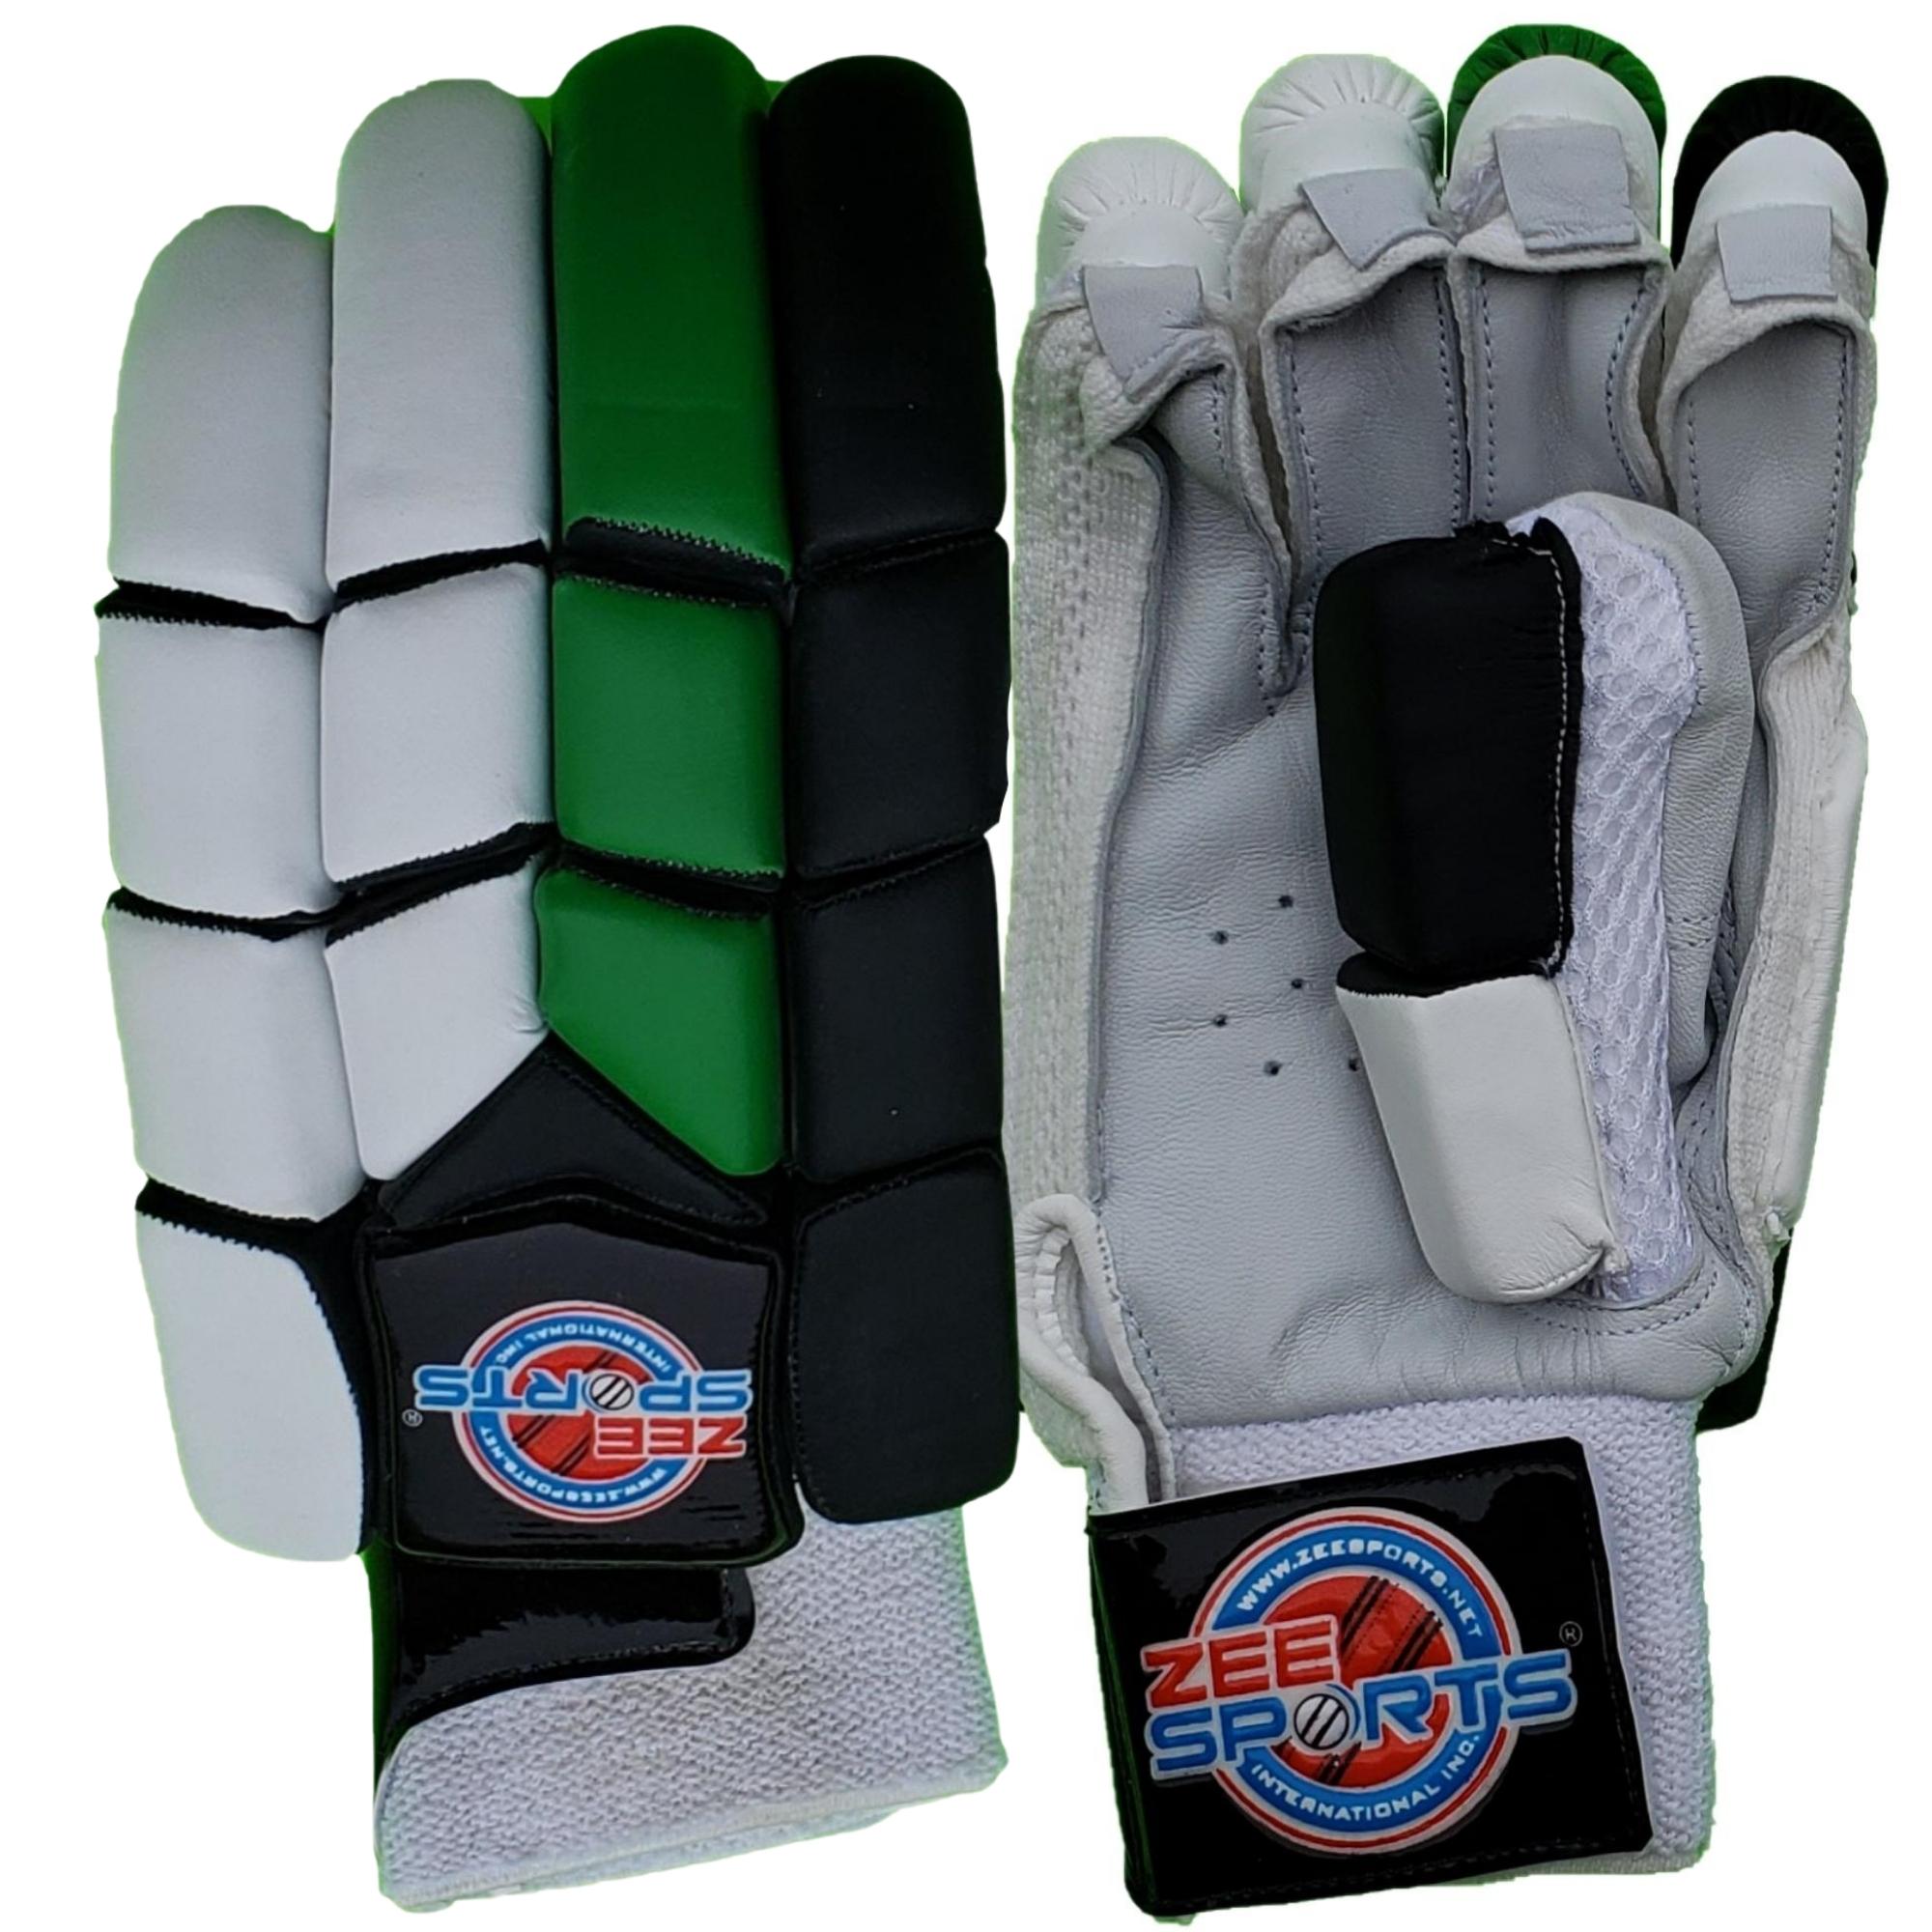 Zee Sports Youth Green Black Batting Gloves